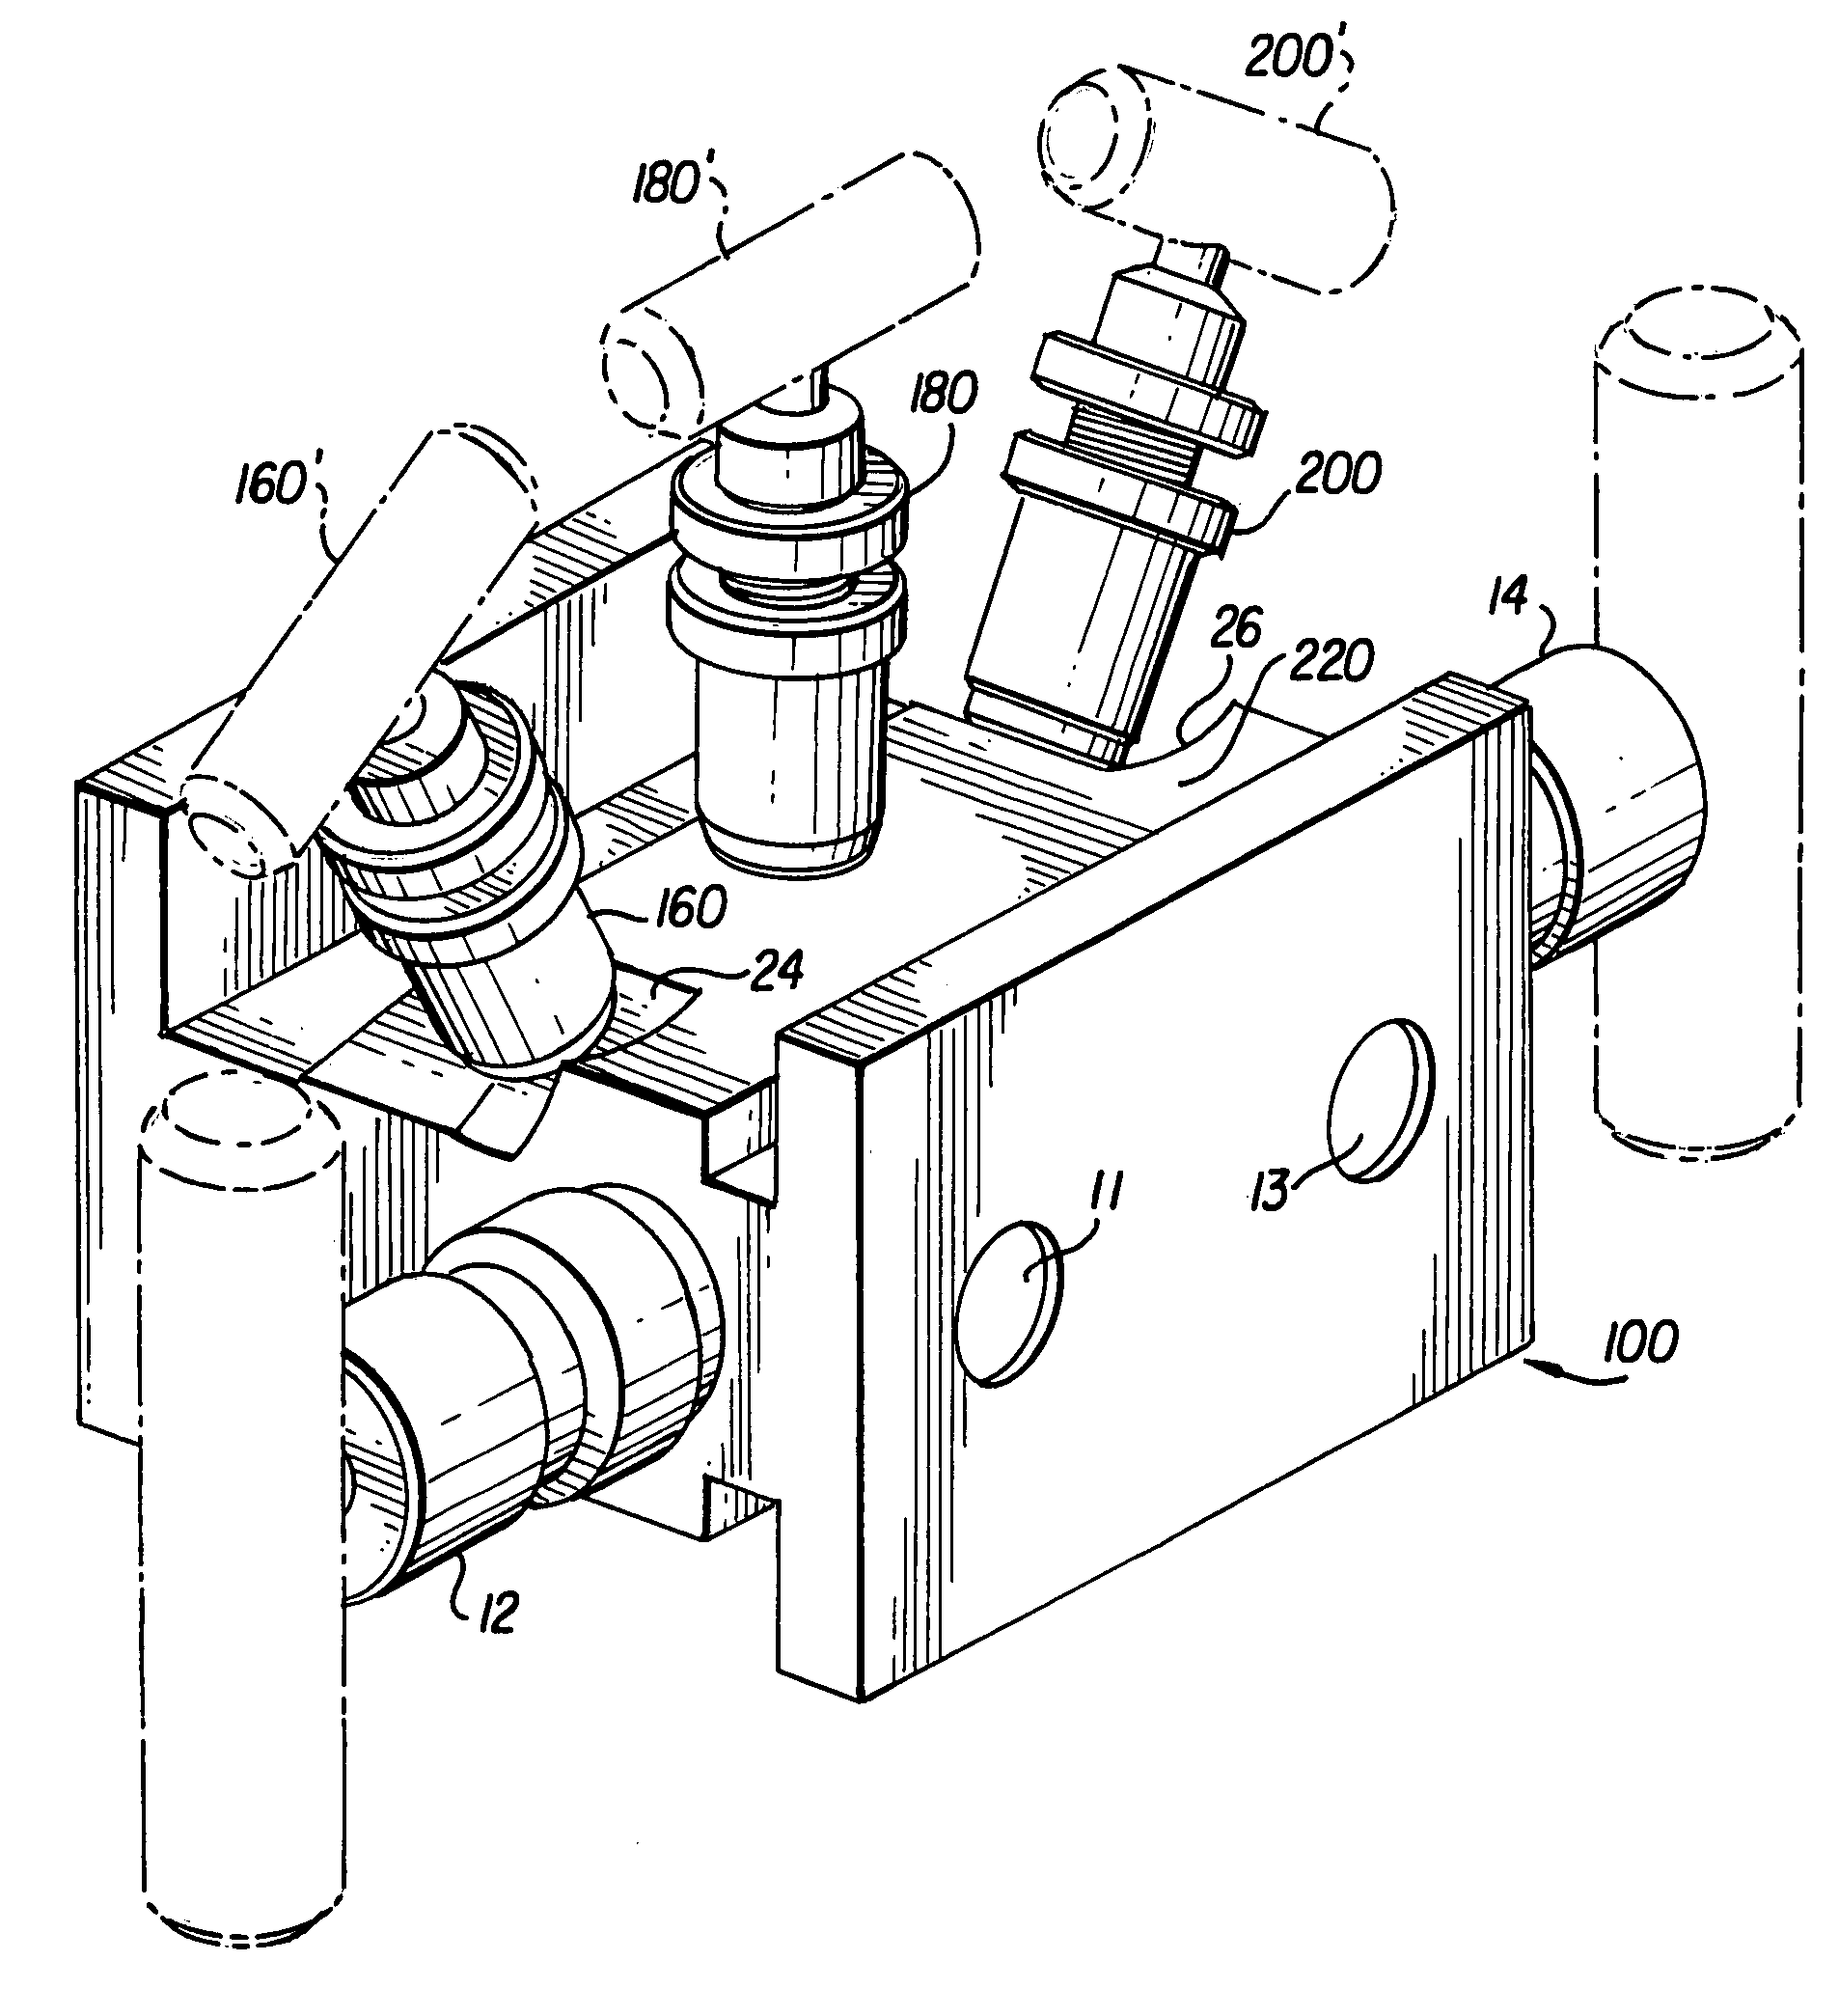 Five valve manifold with angle bonnet details